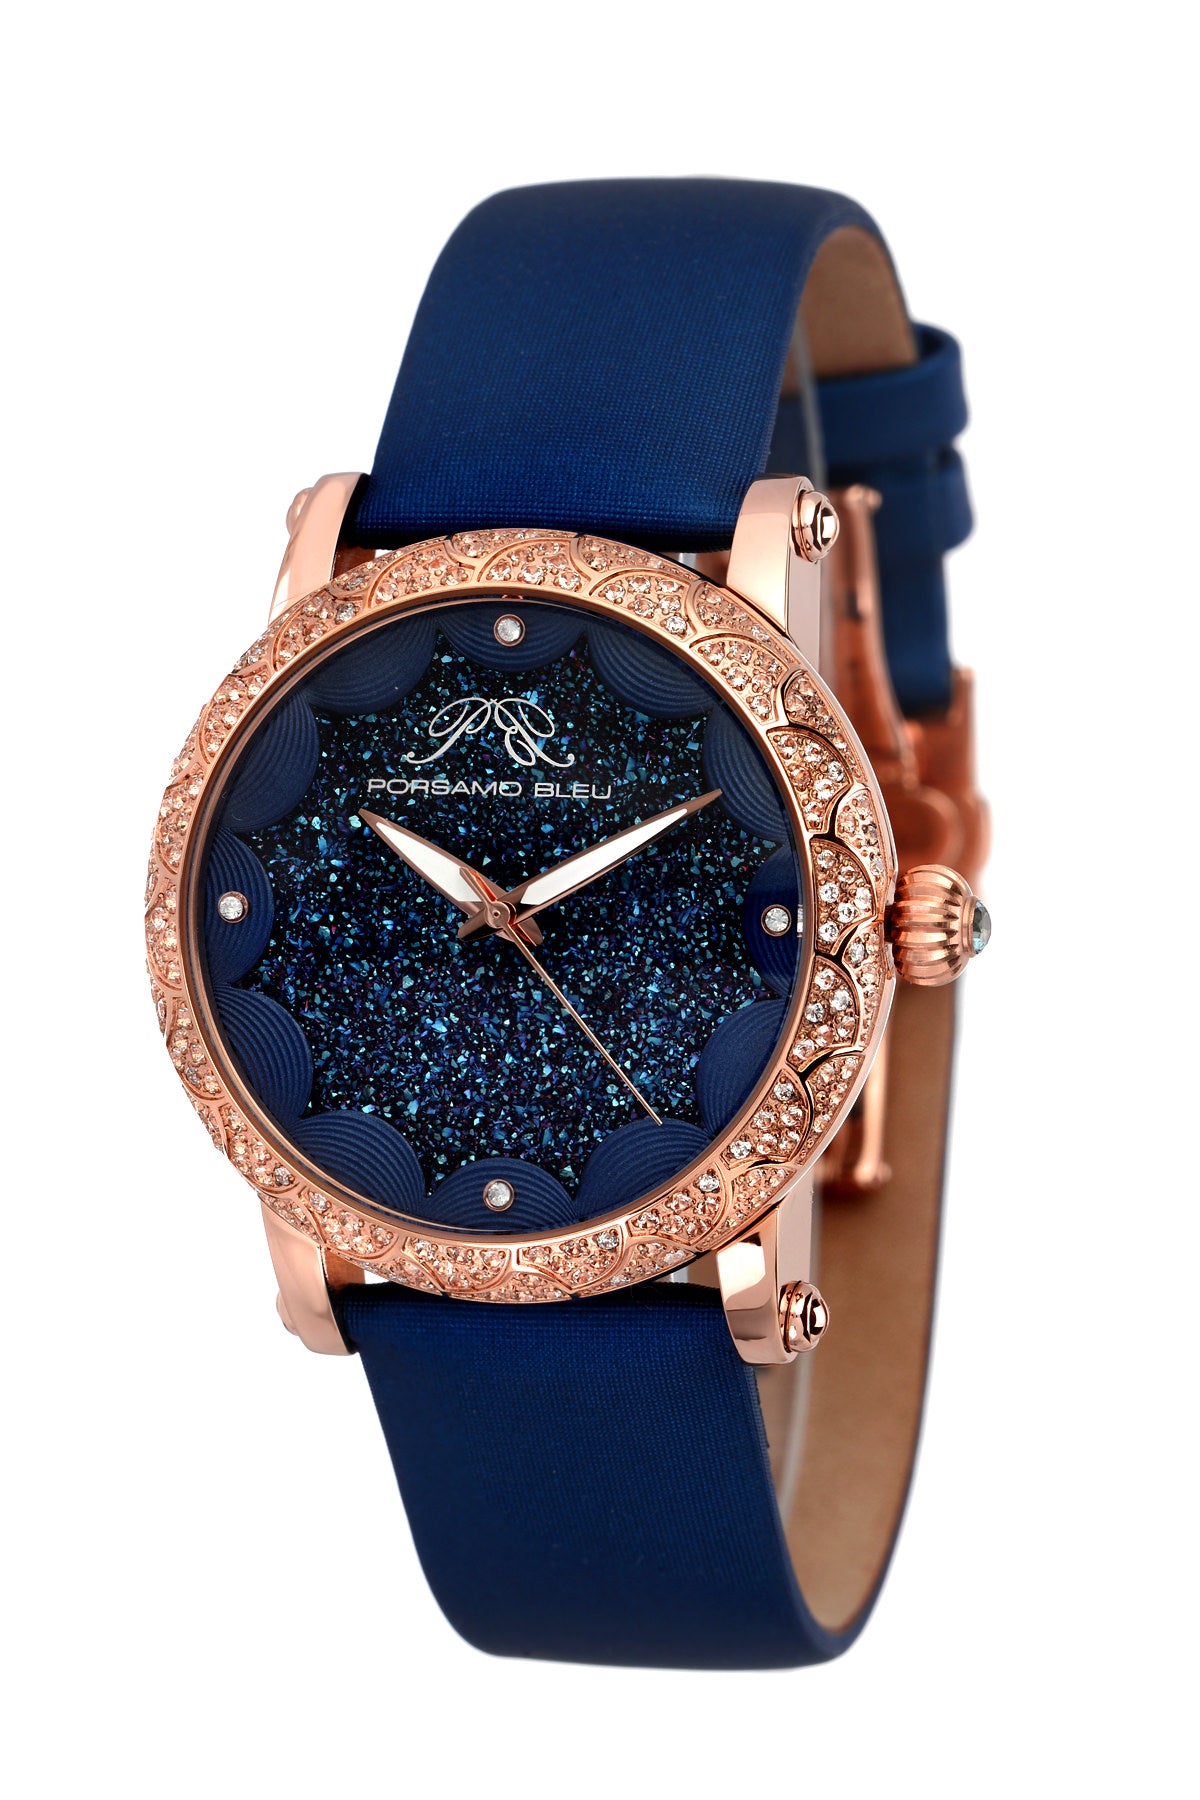 Porsamo Bleu Genevieve Luxury Topaz Women's Satin Leather Watch, Rose, Blue 682CGEL